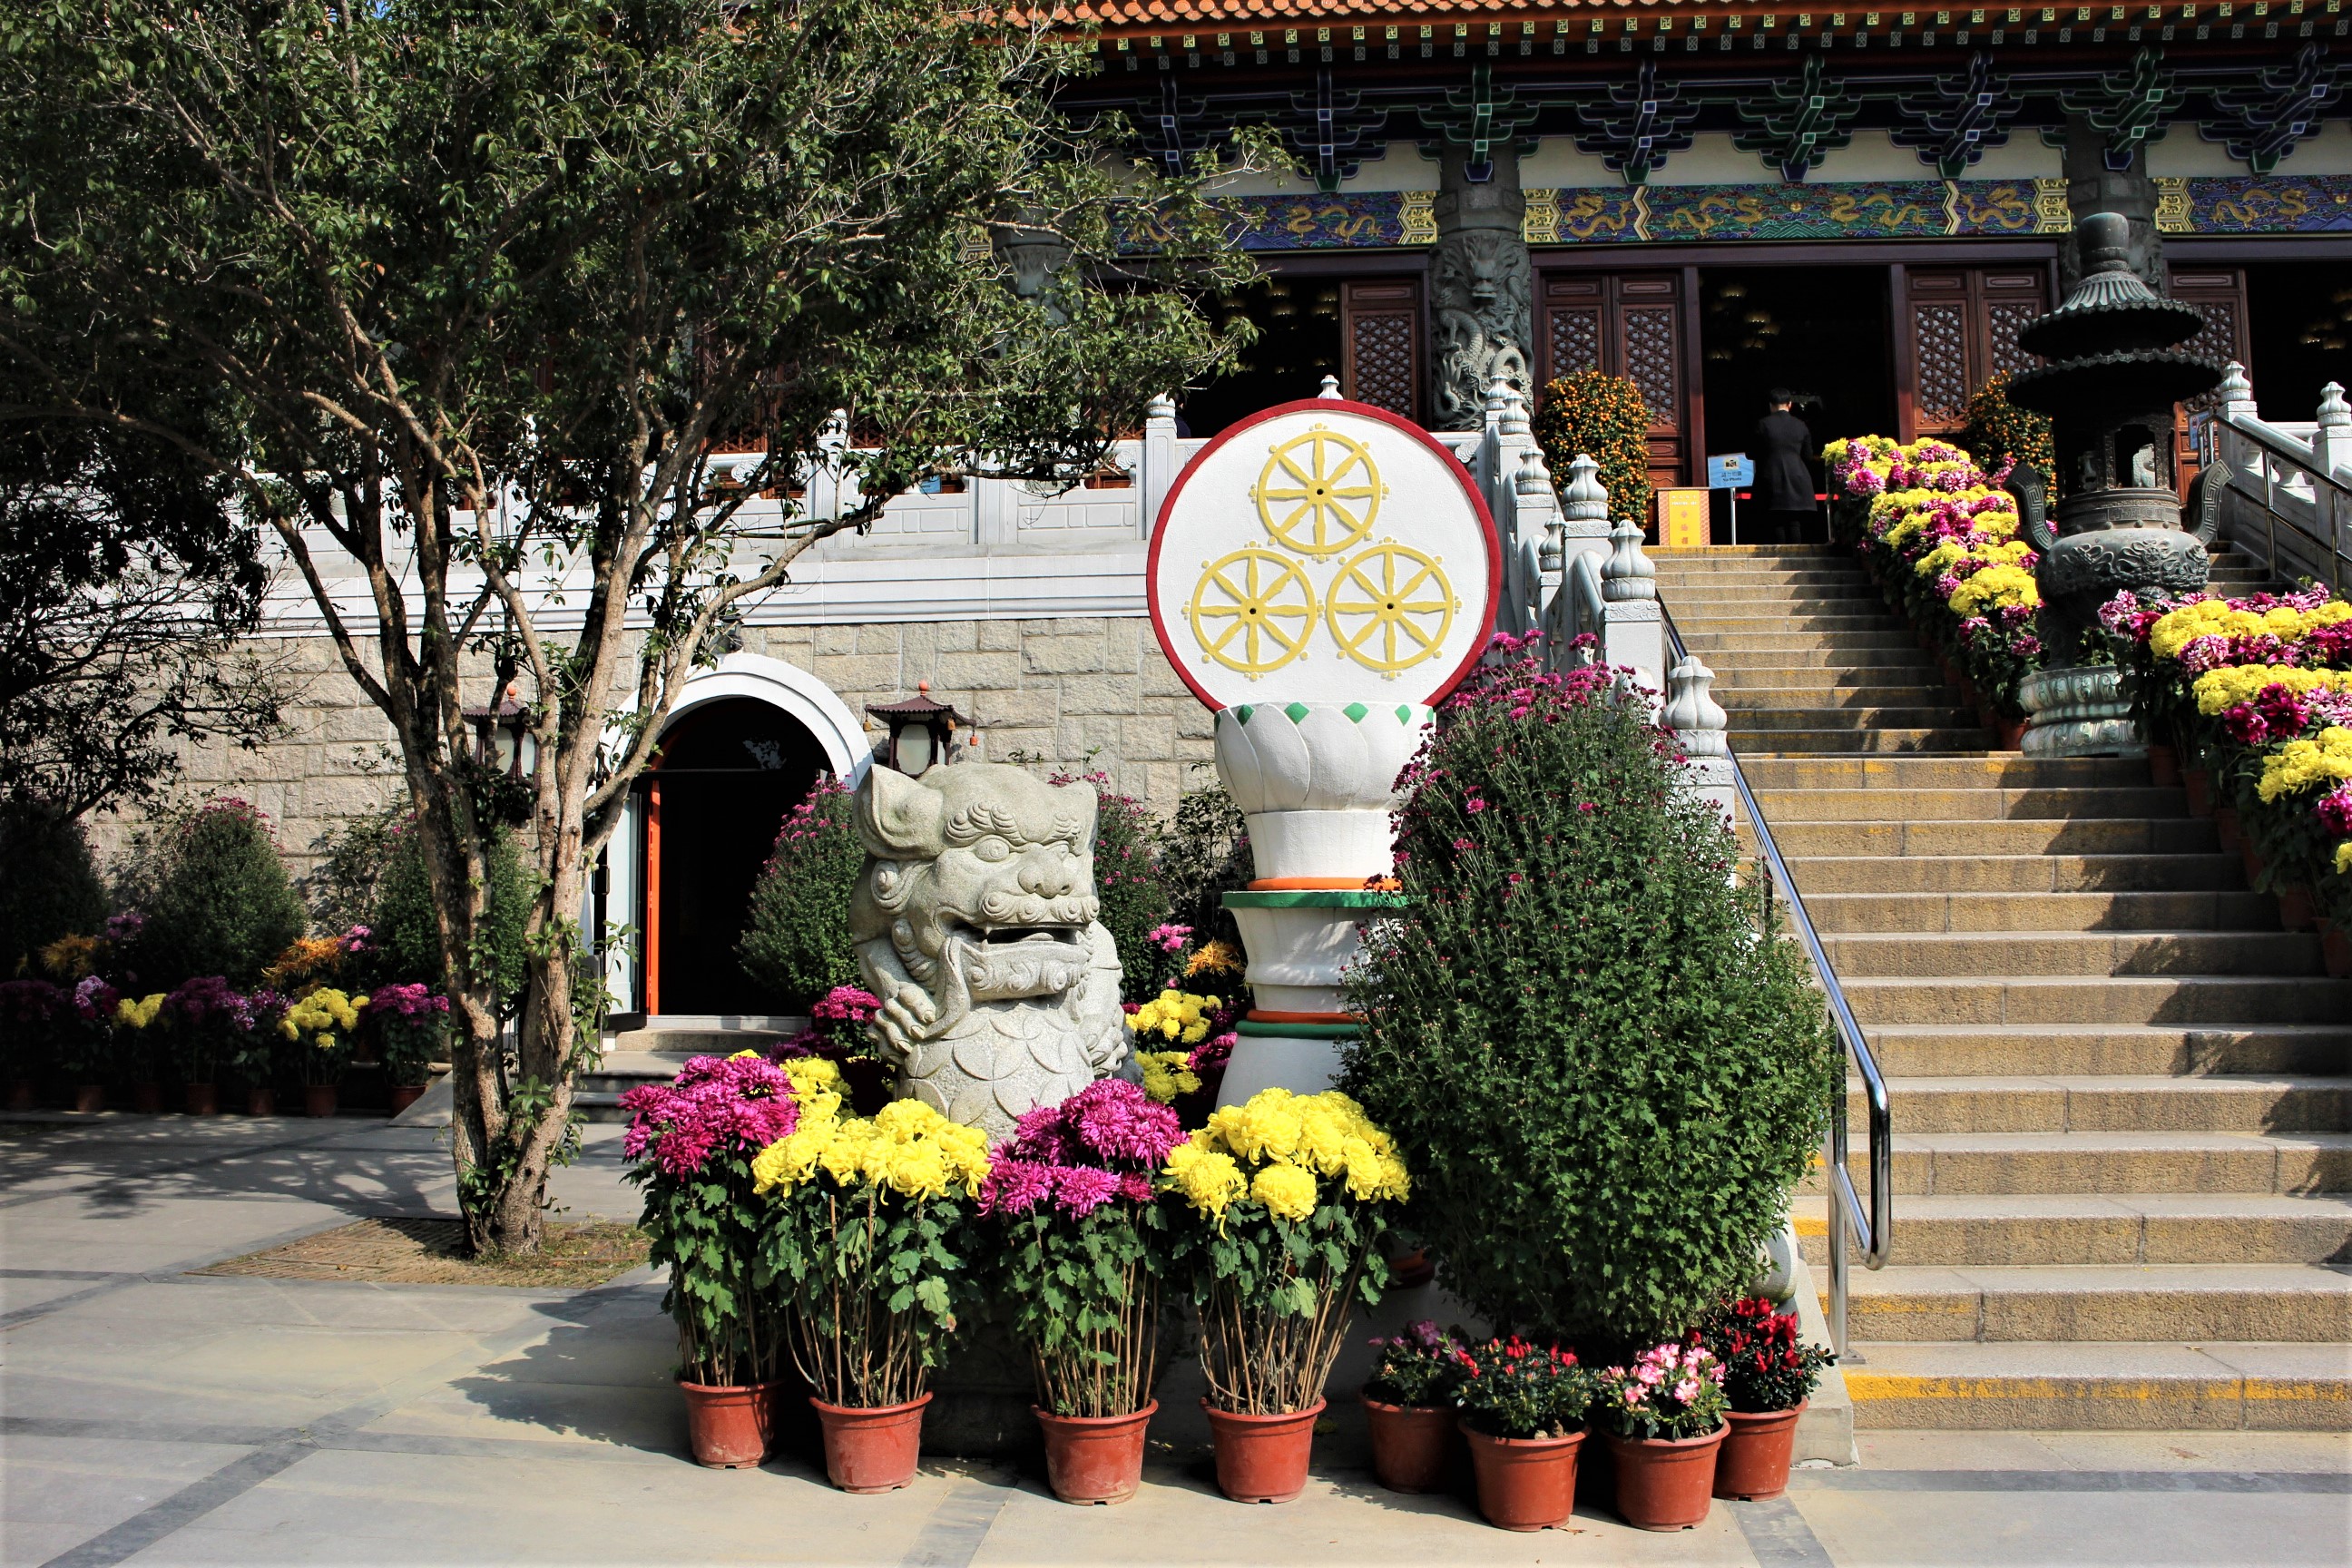 Po Lin monastery